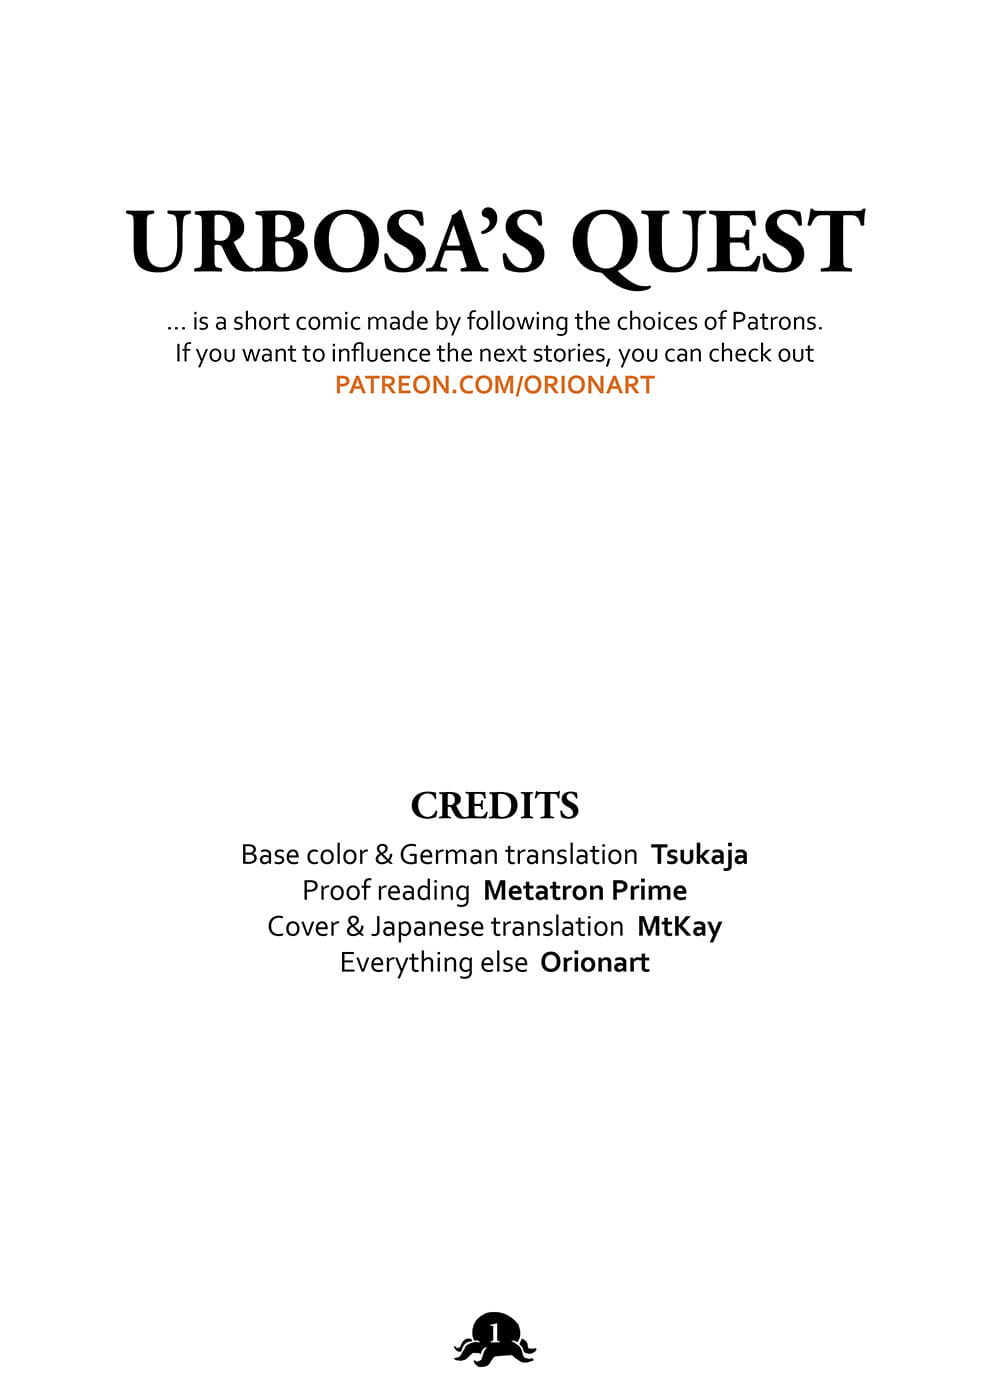 orionart urbosa’s 퀘스트 부품 1 page 1